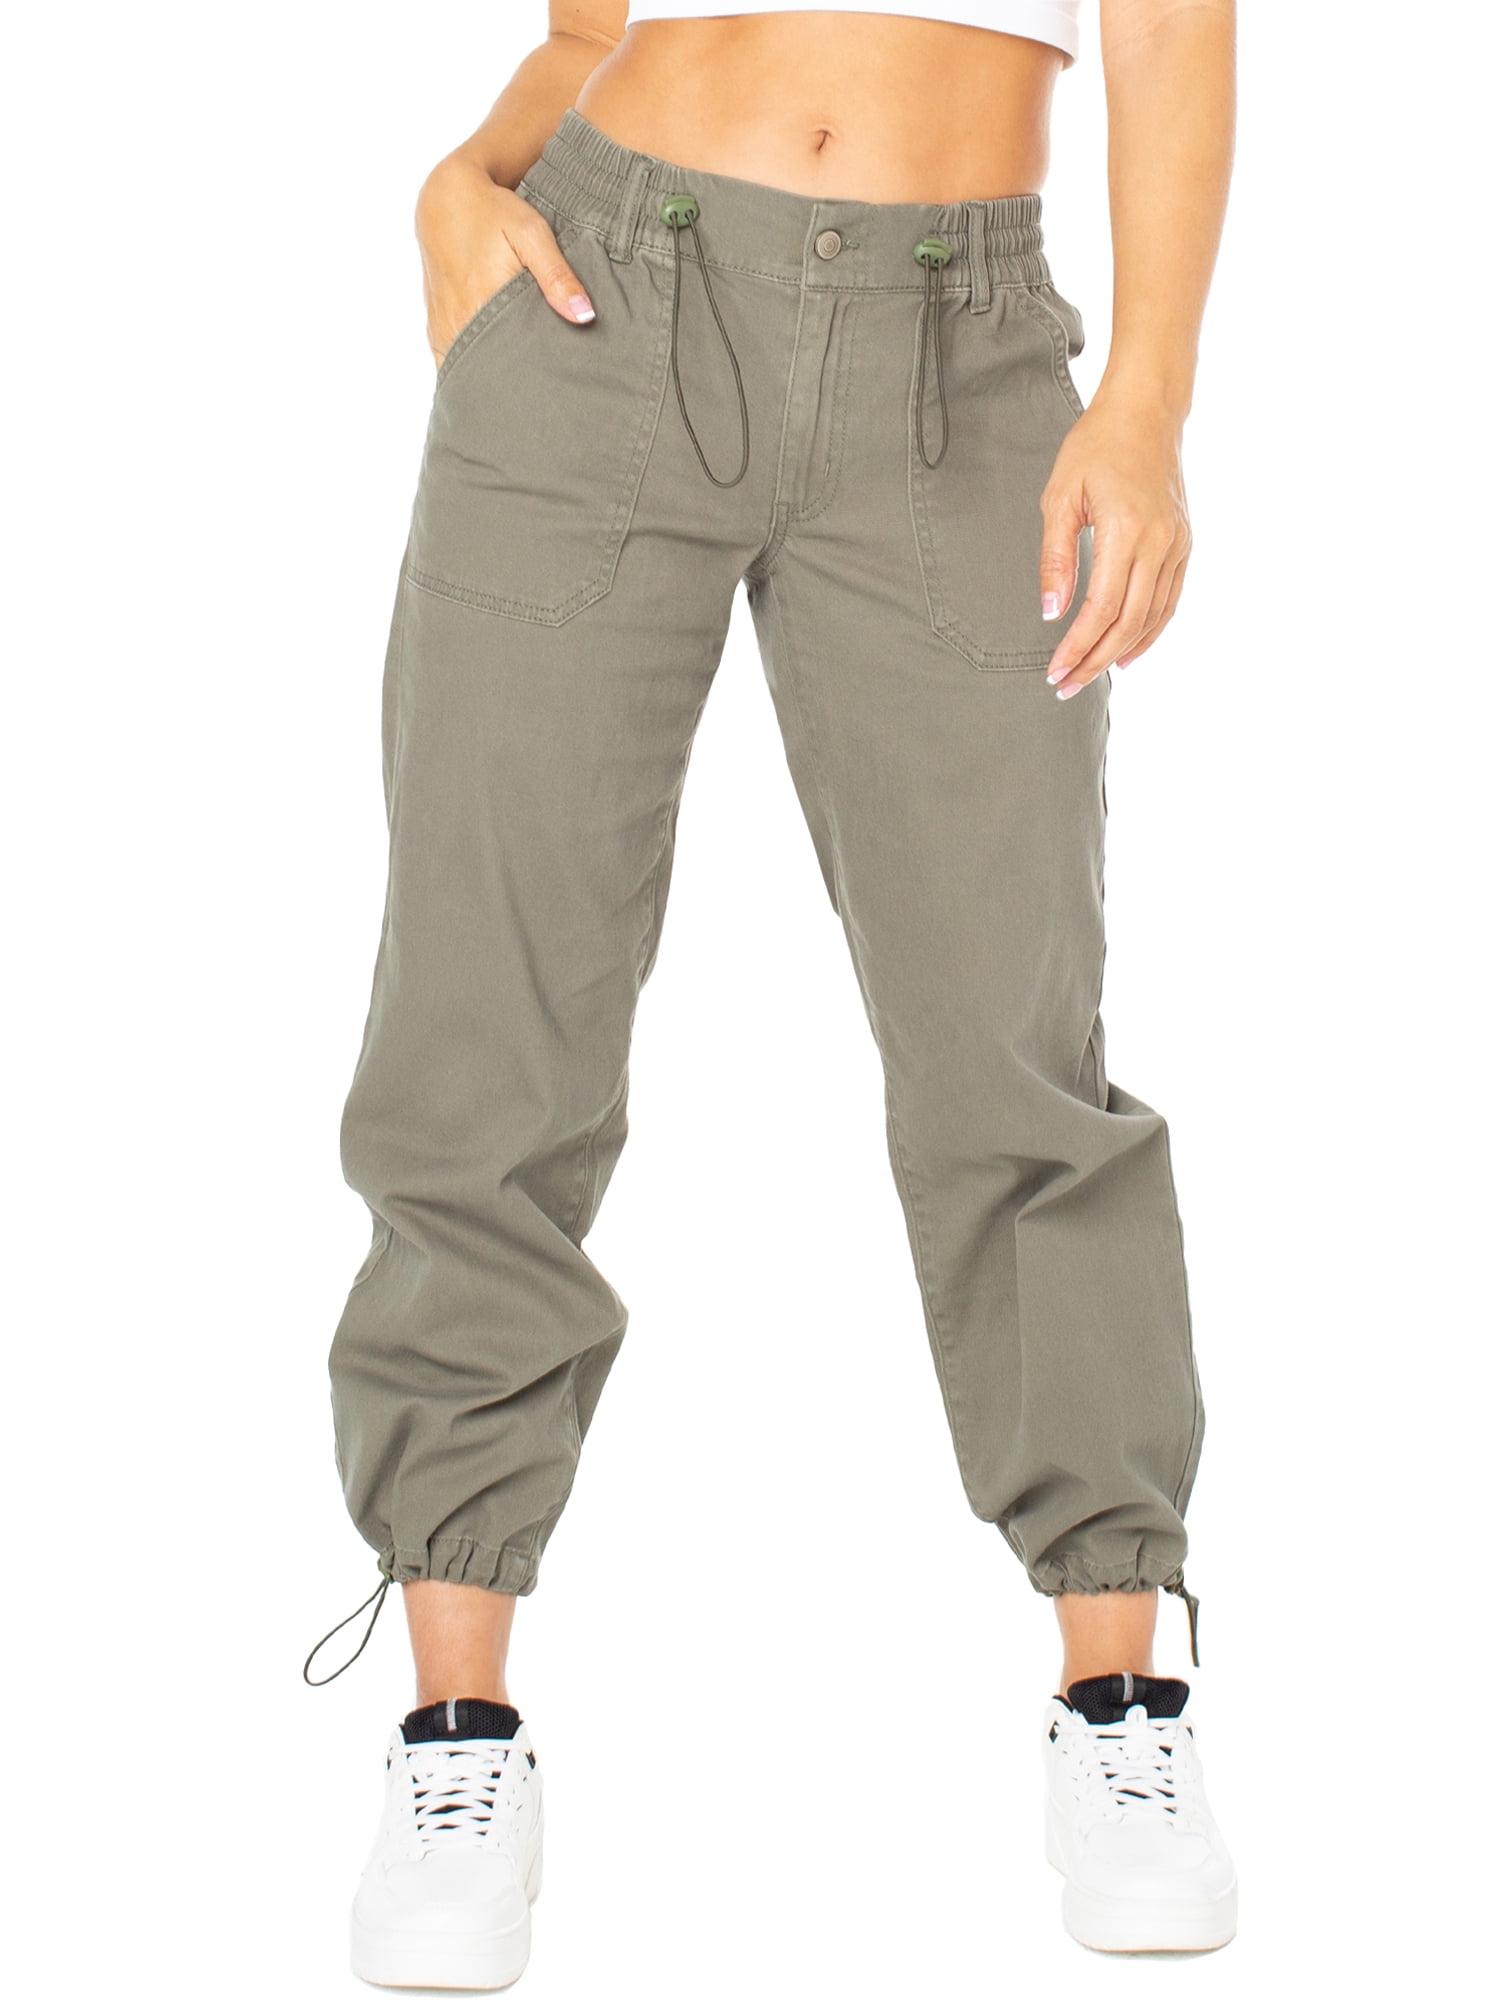 Juniors Pants & Leggings, Buy Cargo, Uniform Pants